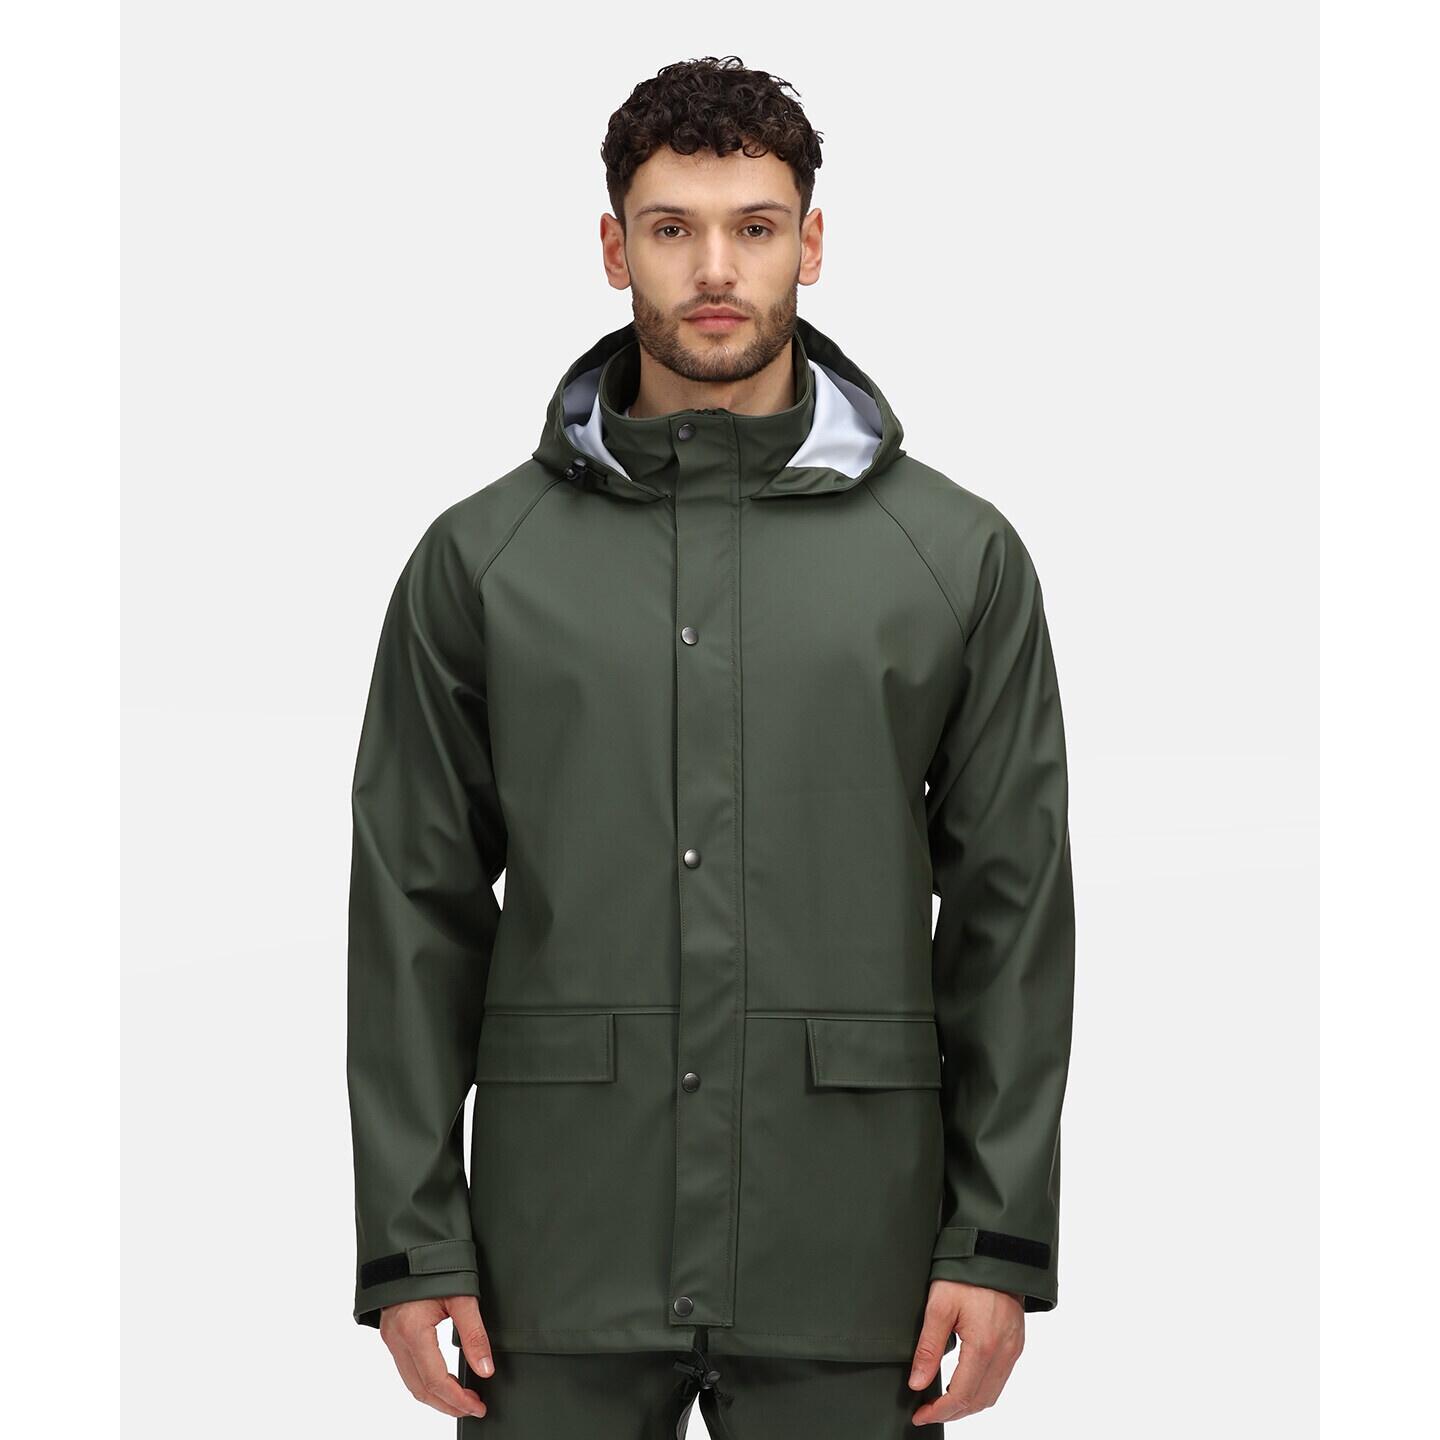 Mens Stormflex II Jacket (Olive Green) 4/5